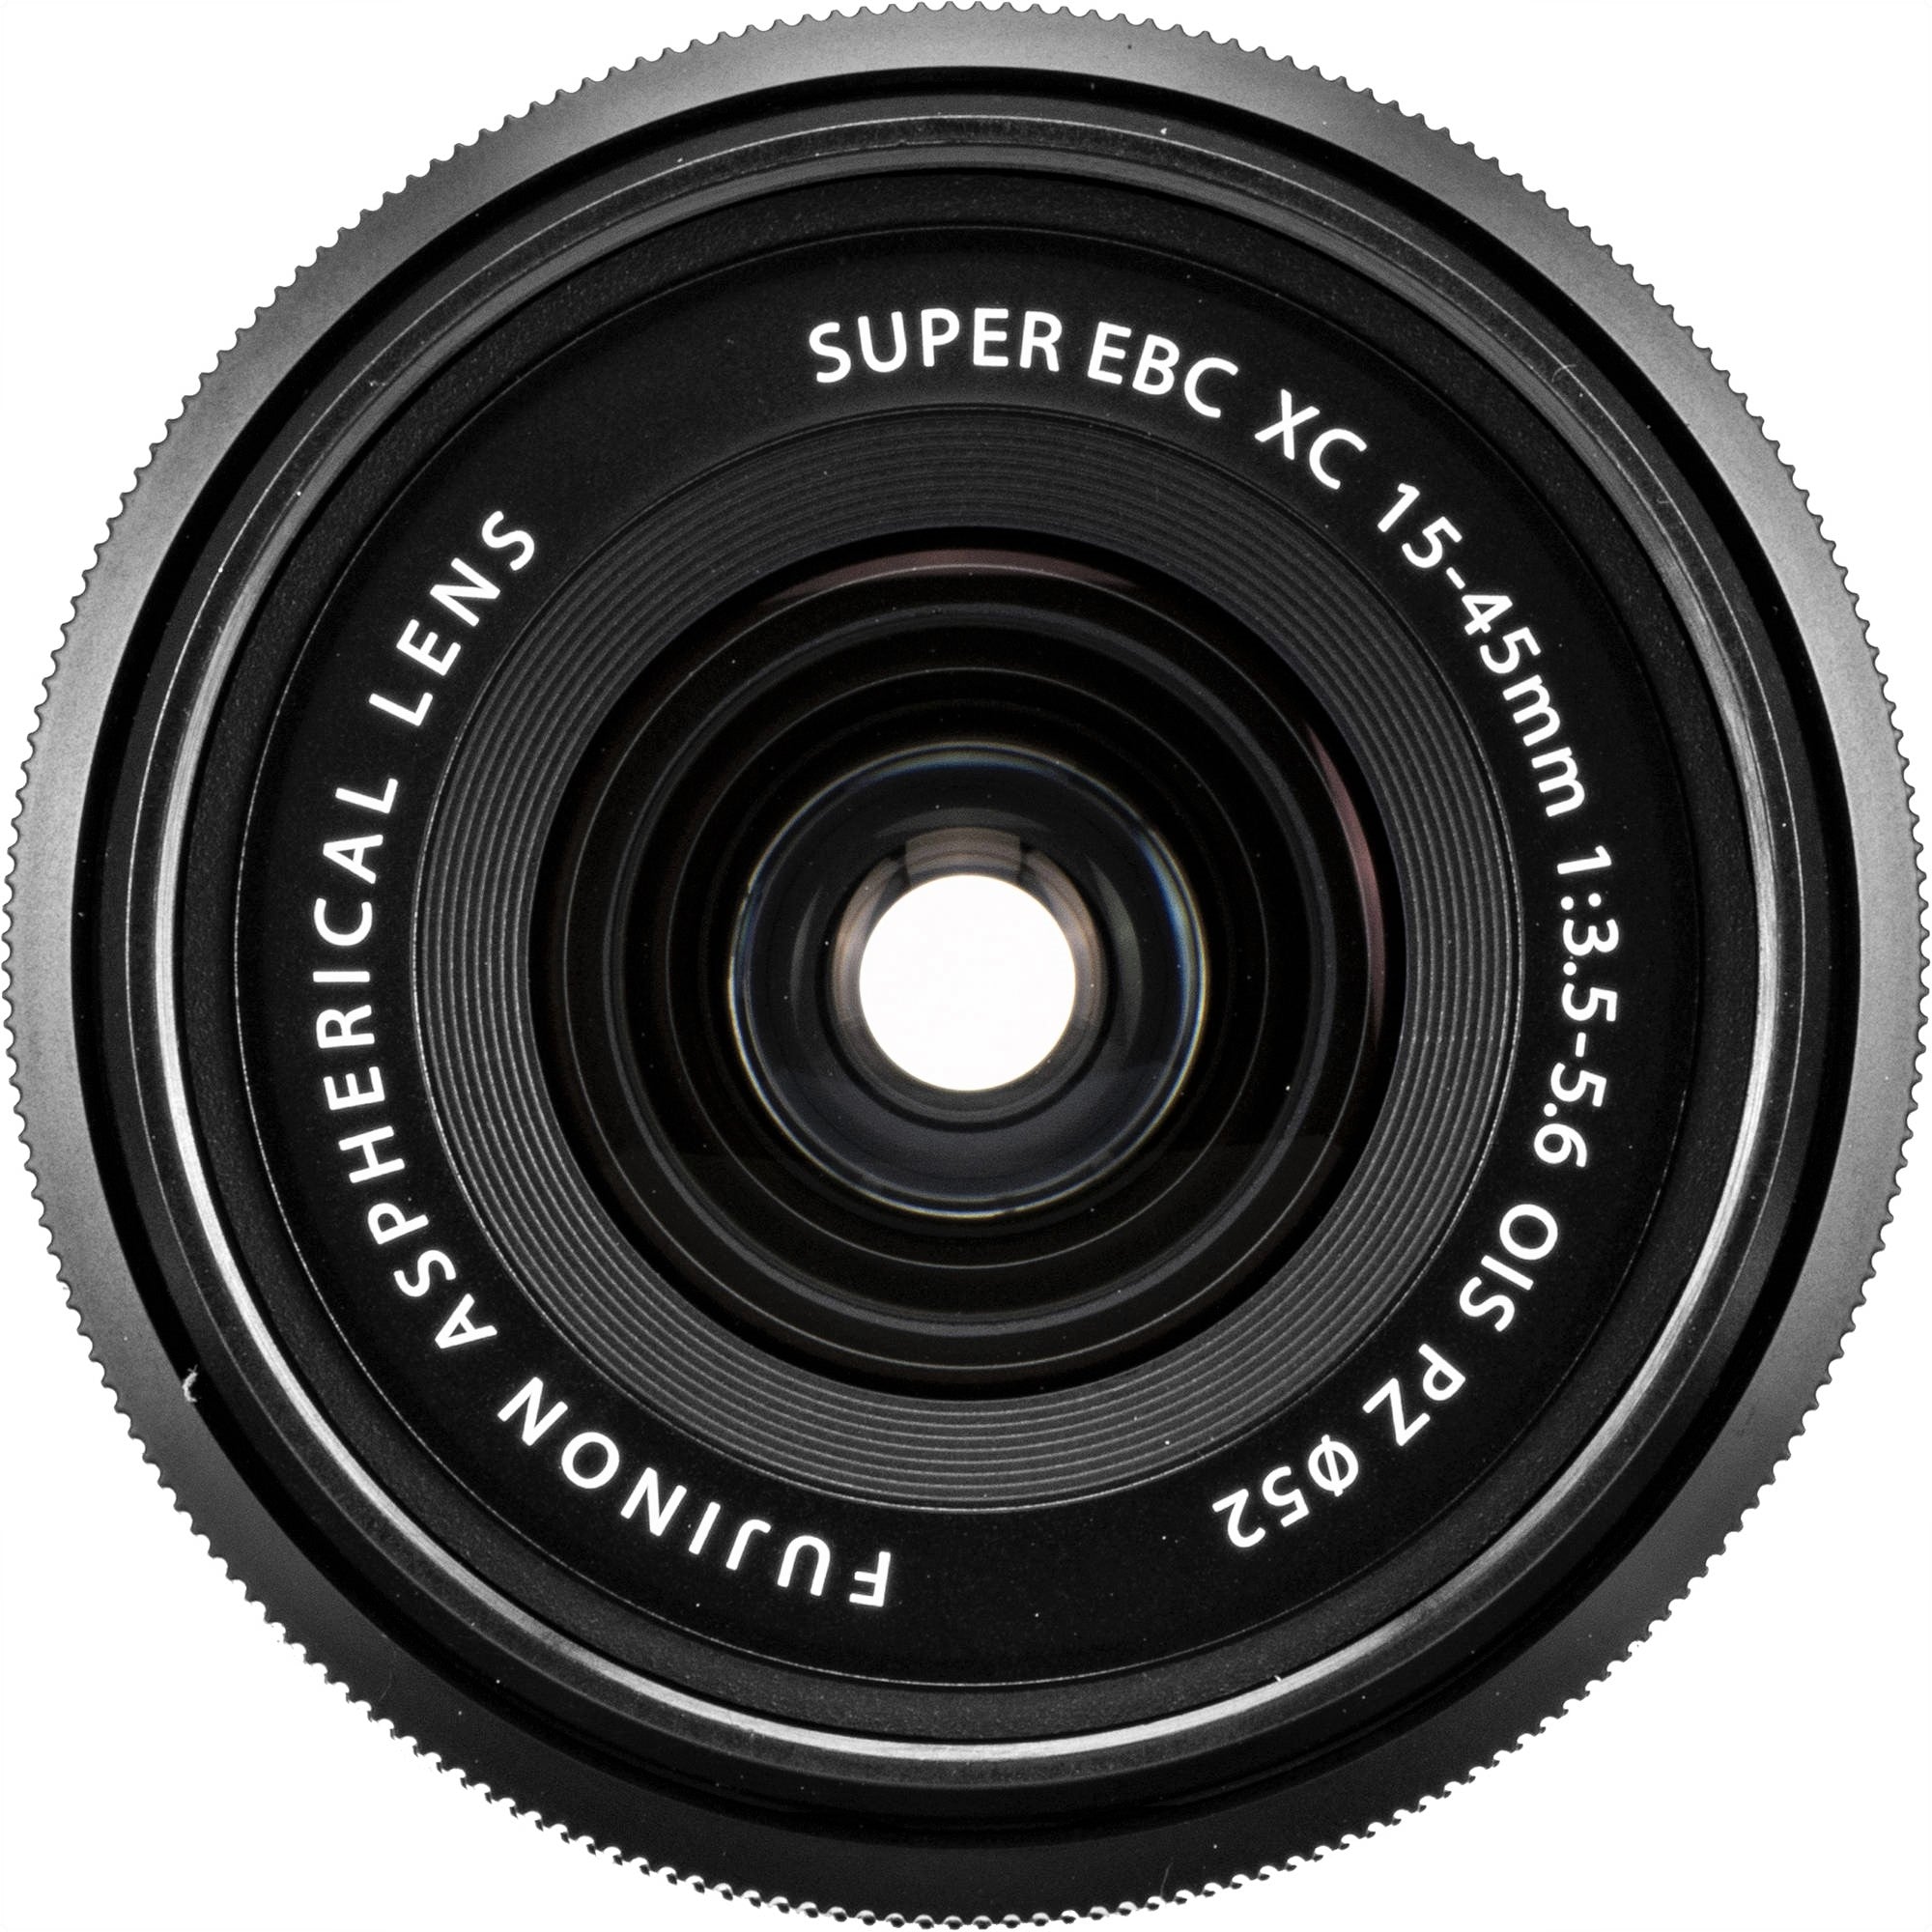 Fujifilm X-S20 Mirrorless Digital Camera with 15-45mm Lens